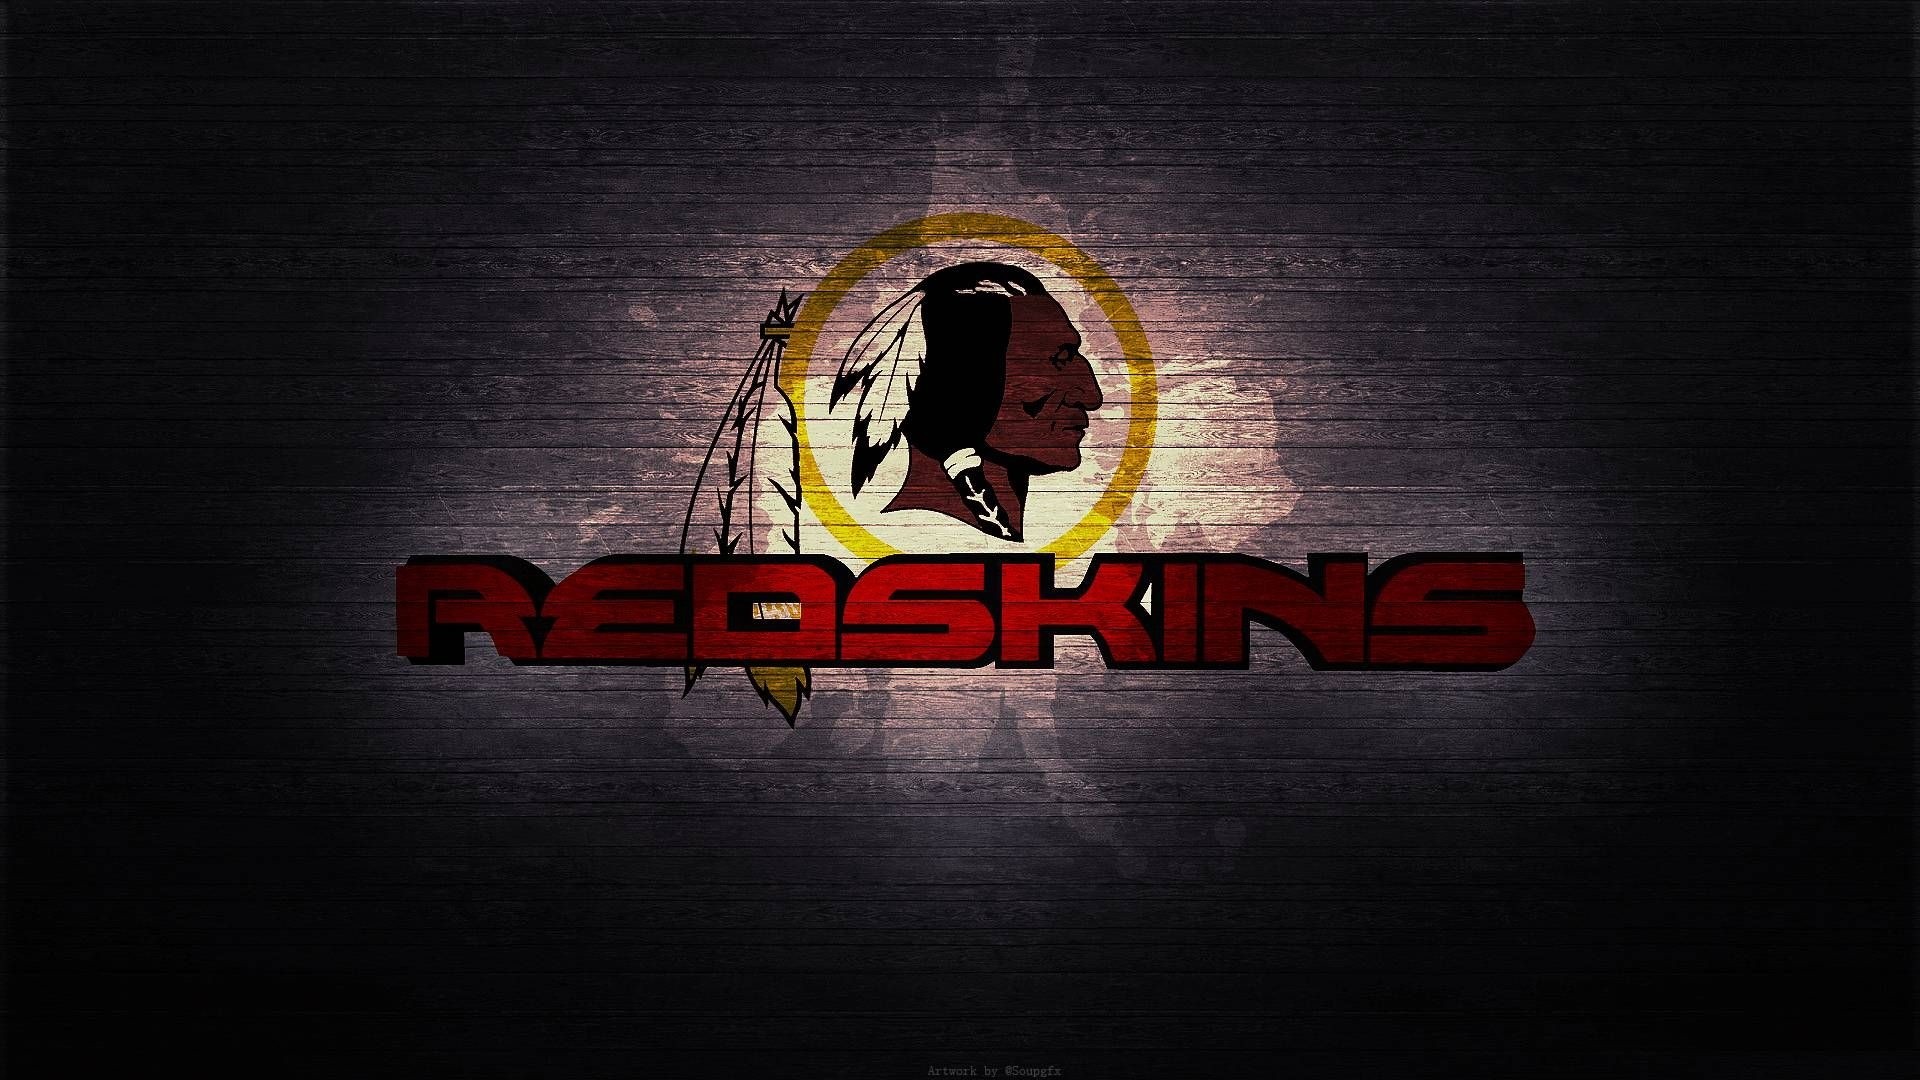 Redskins hd wallpaper download